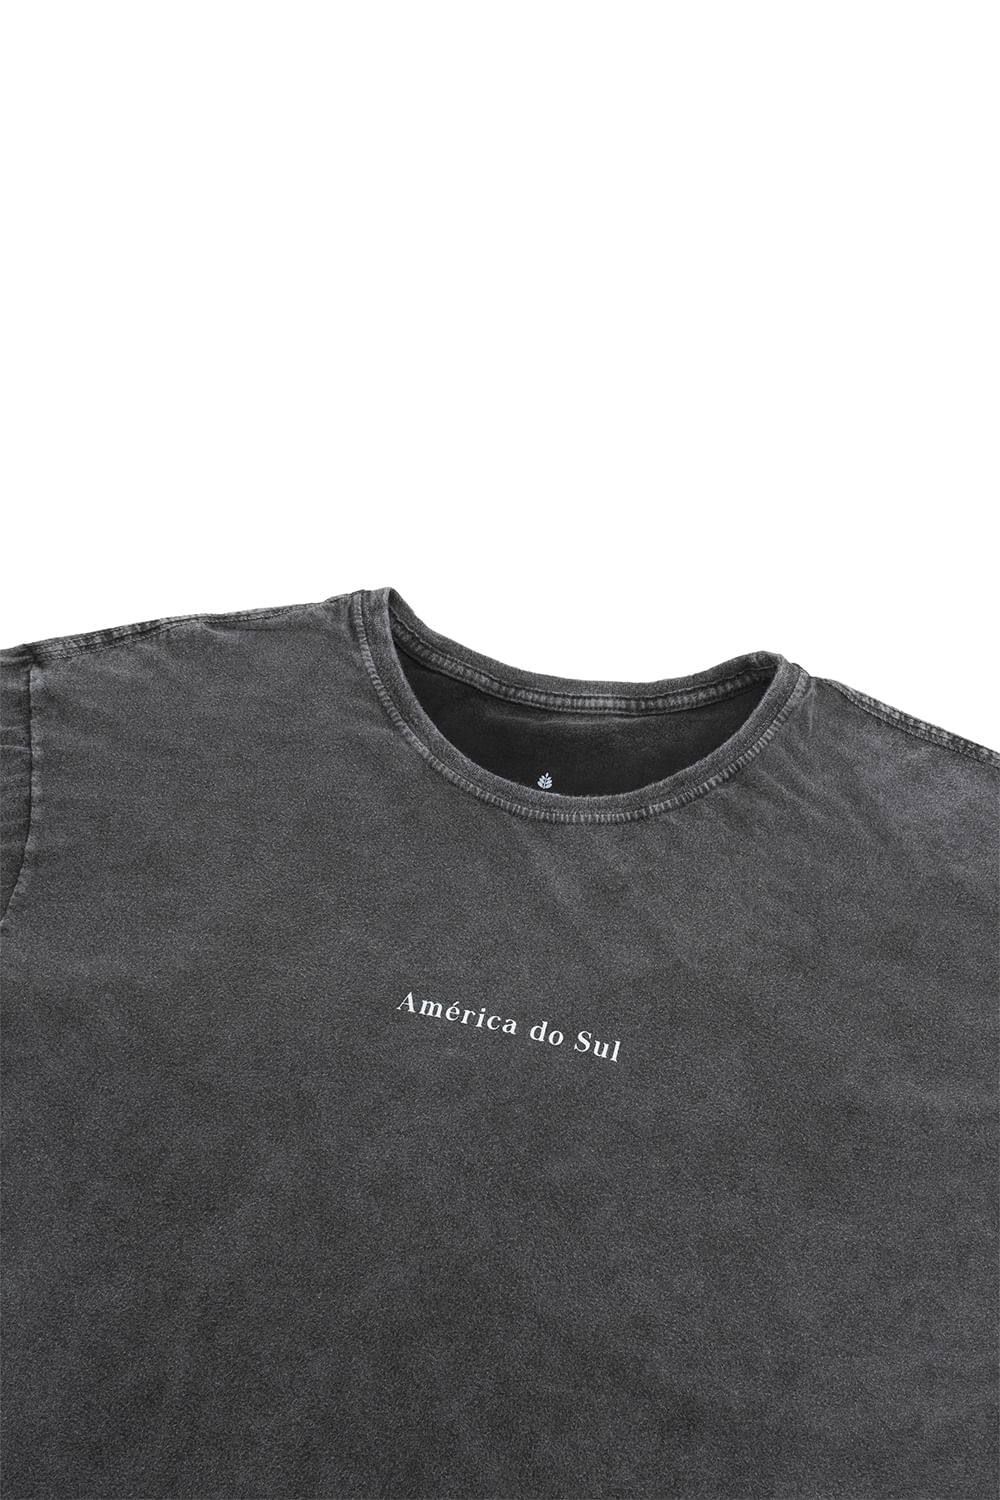 Camiseta-ML-America-Do-Sul-Lettering-Preto-Detalhe